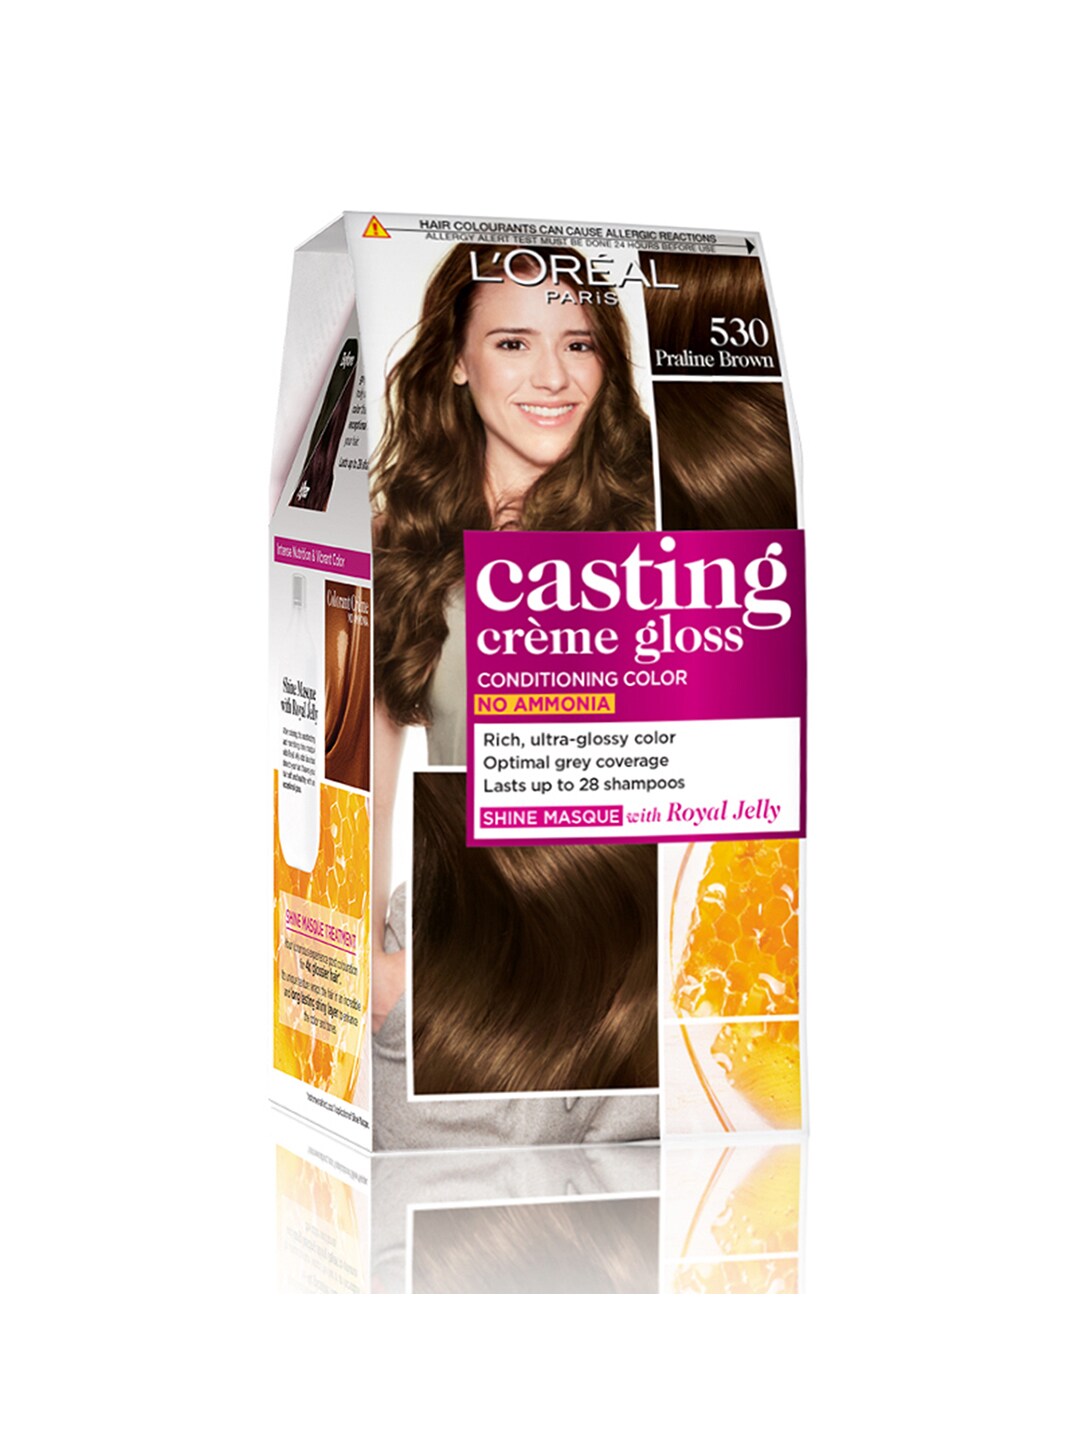 LOreal Paris Casting Creme Gloss Hair Color - Praline Brown 530 87.5 g + 72 ml Price in India